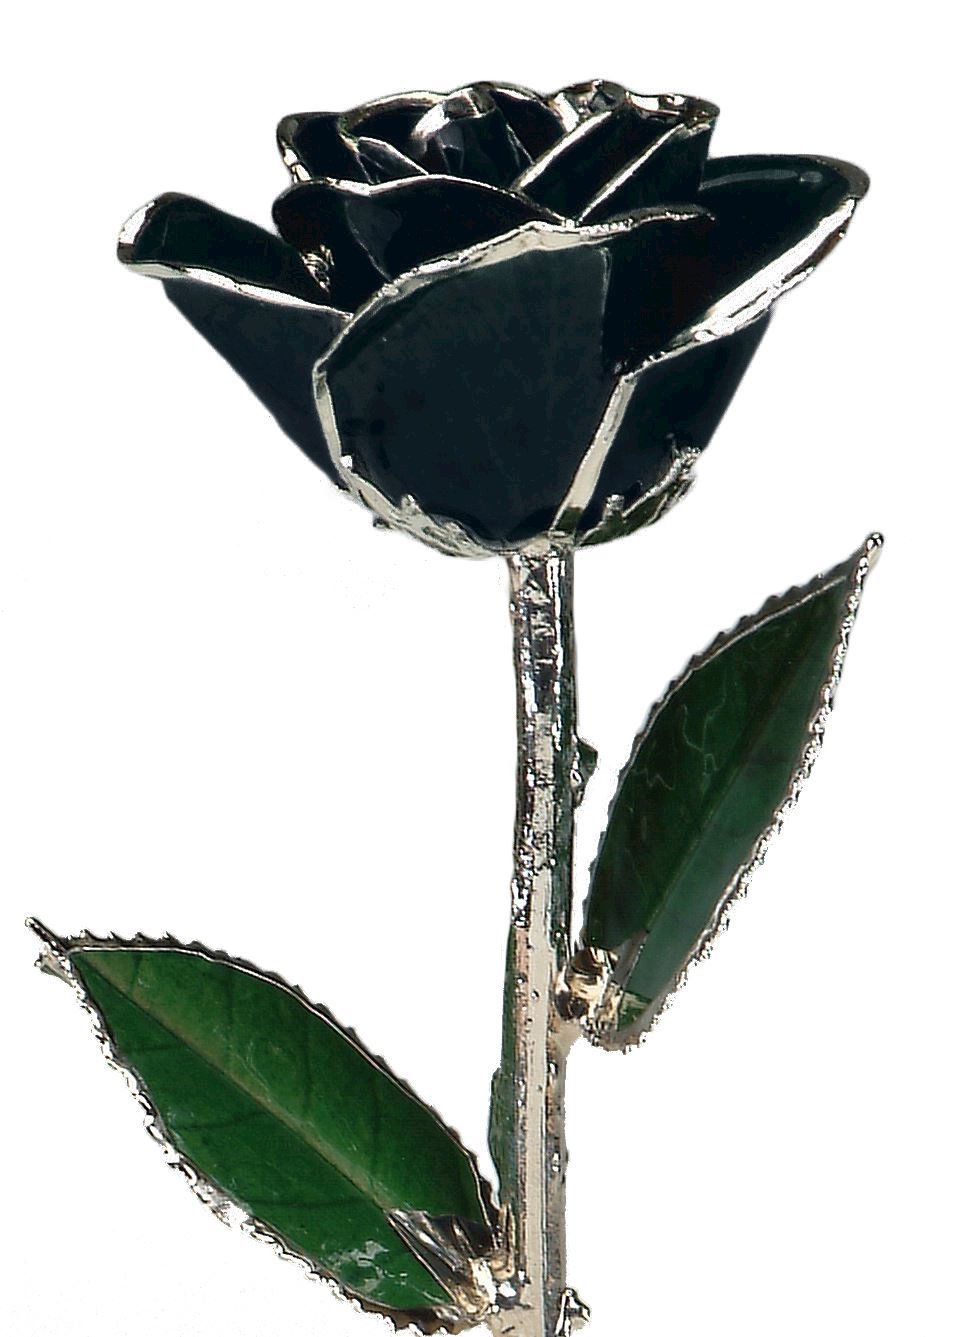 https://www.arthursjewelers.com/content/images/thumbs/Original/platinum-black-rose_1-19362232.jpeg